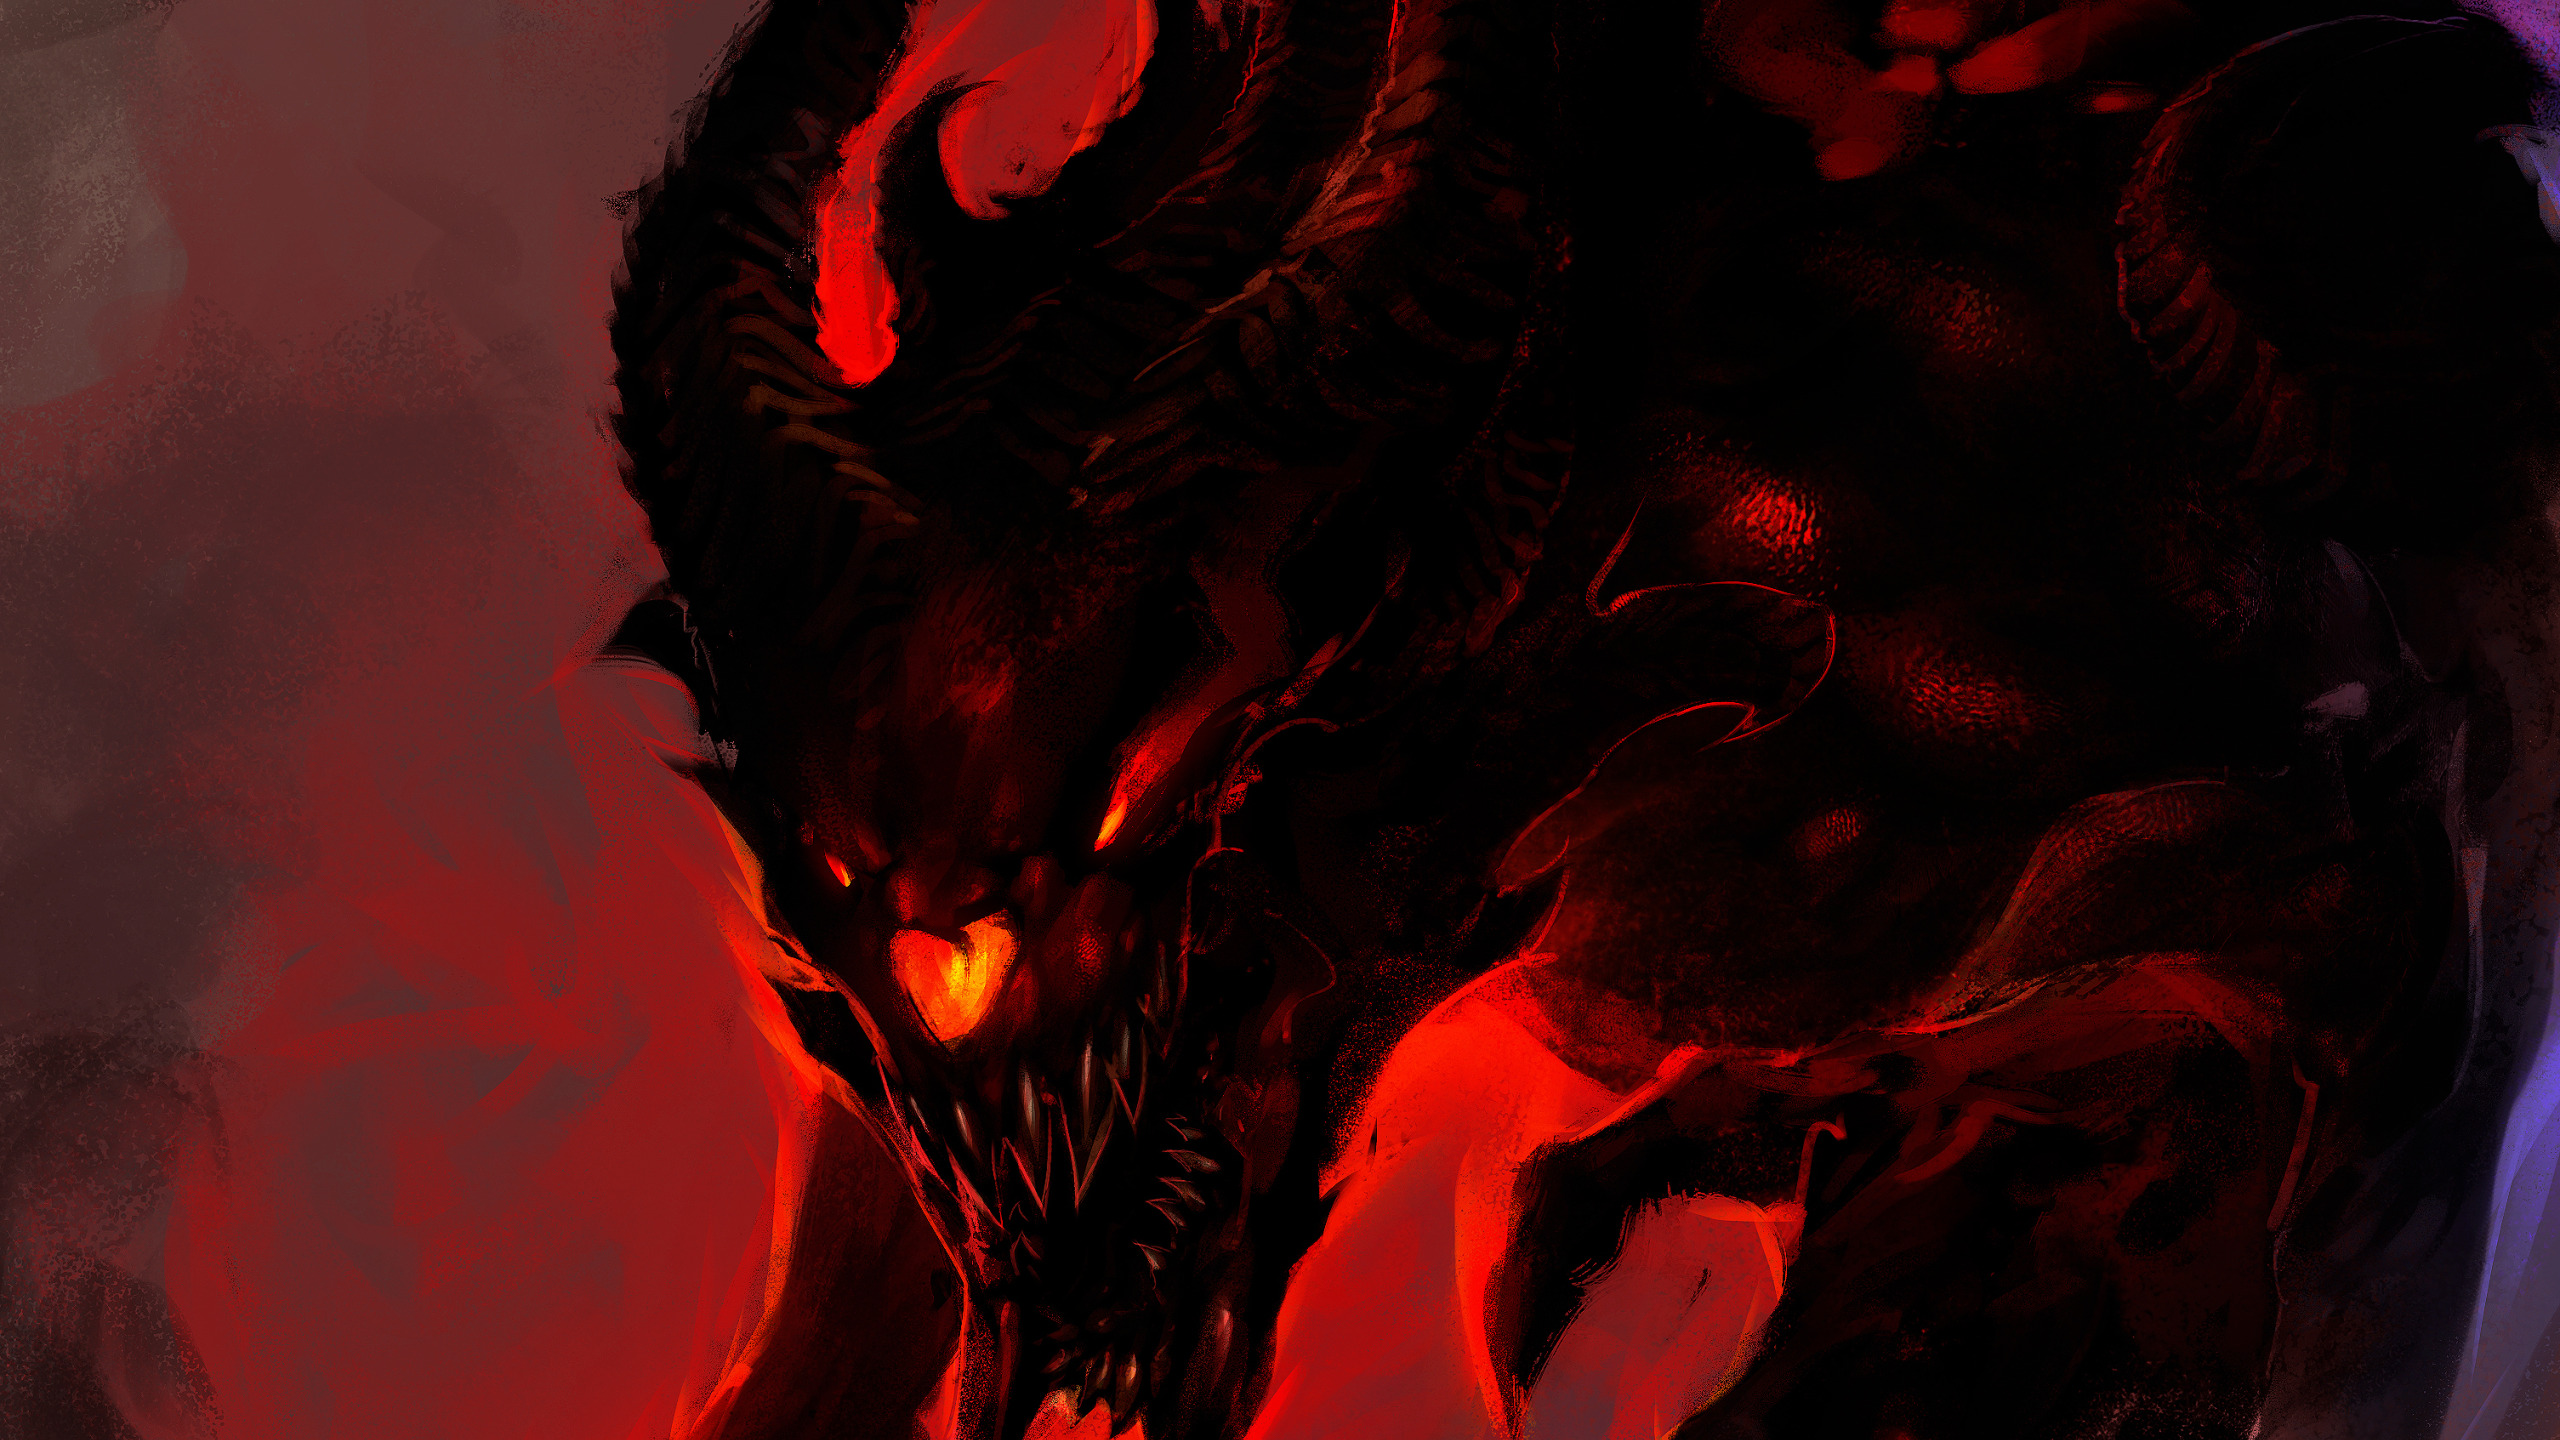 Download wallpaper darkness, fire, the demon, art, evil, Gull, Demon Kaiju,  section fantasy in resolution 2560x1440